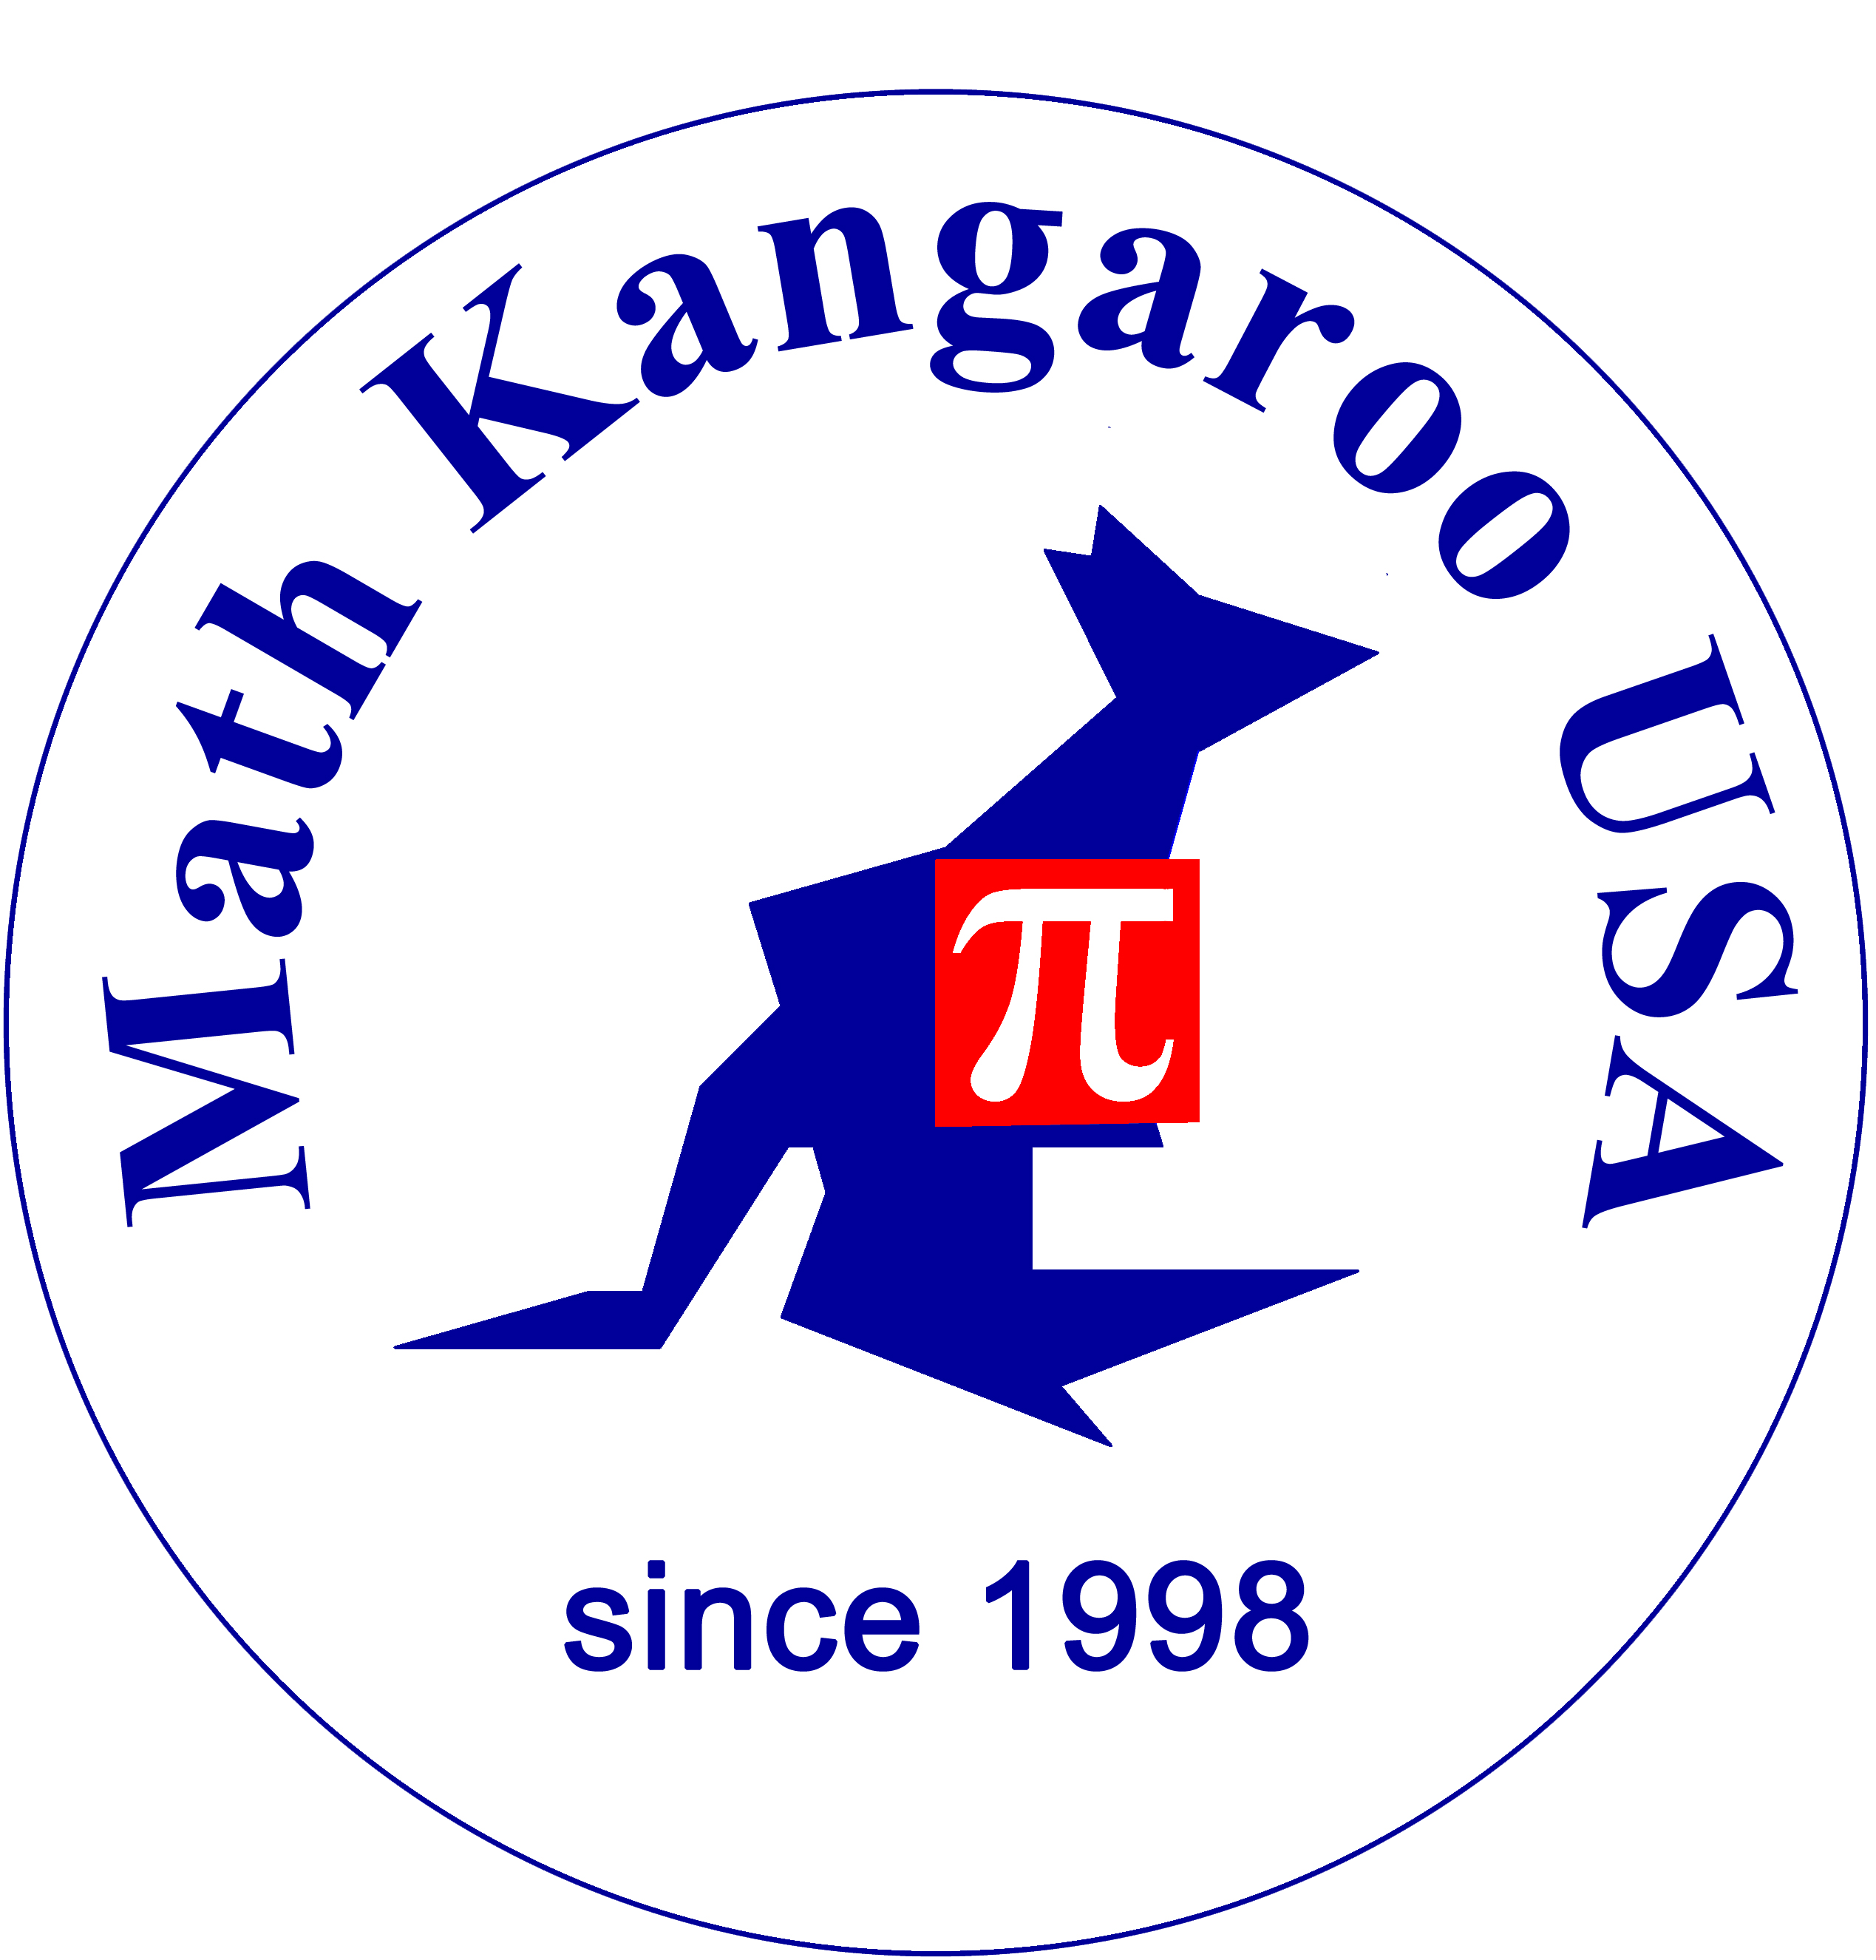 www.mathkangaroo.org